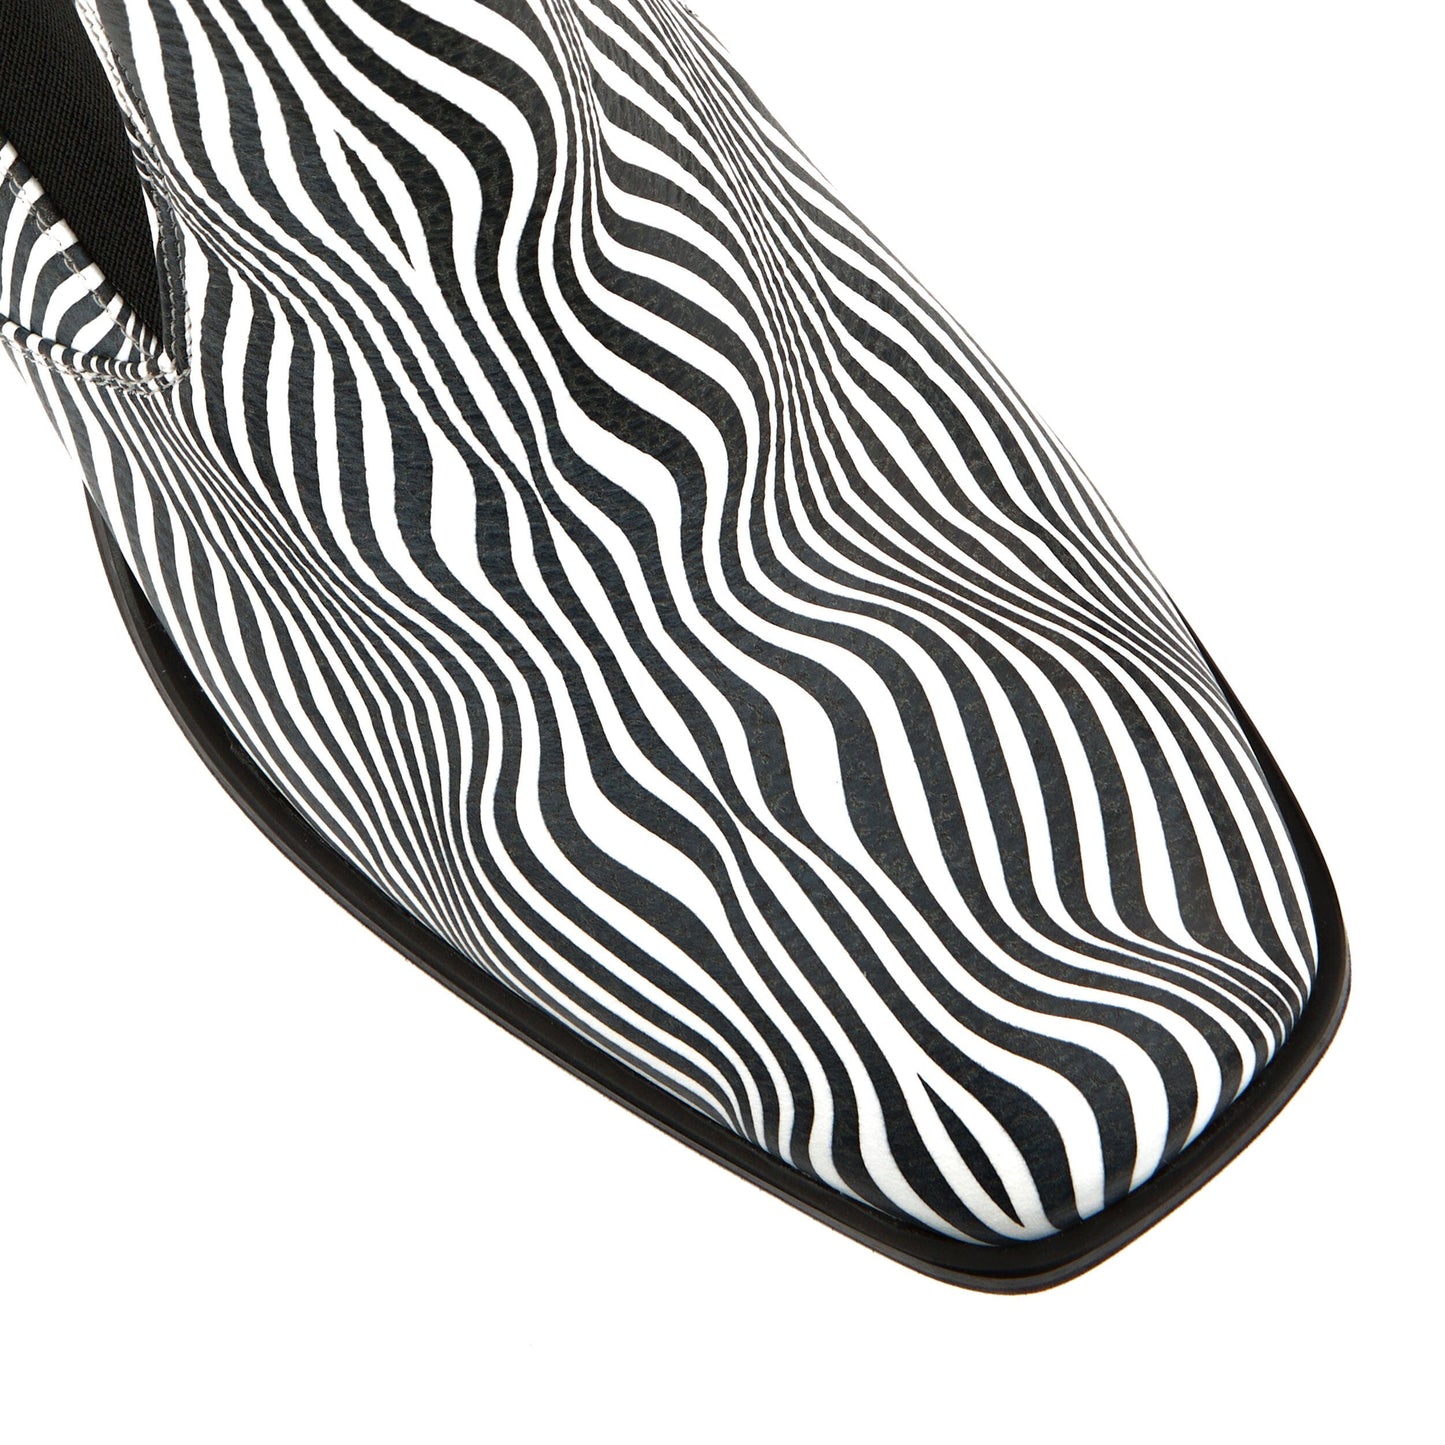 Claudia Mini - Optical Zebra & Black & Pink Womens Ankle Boots Embassy London 